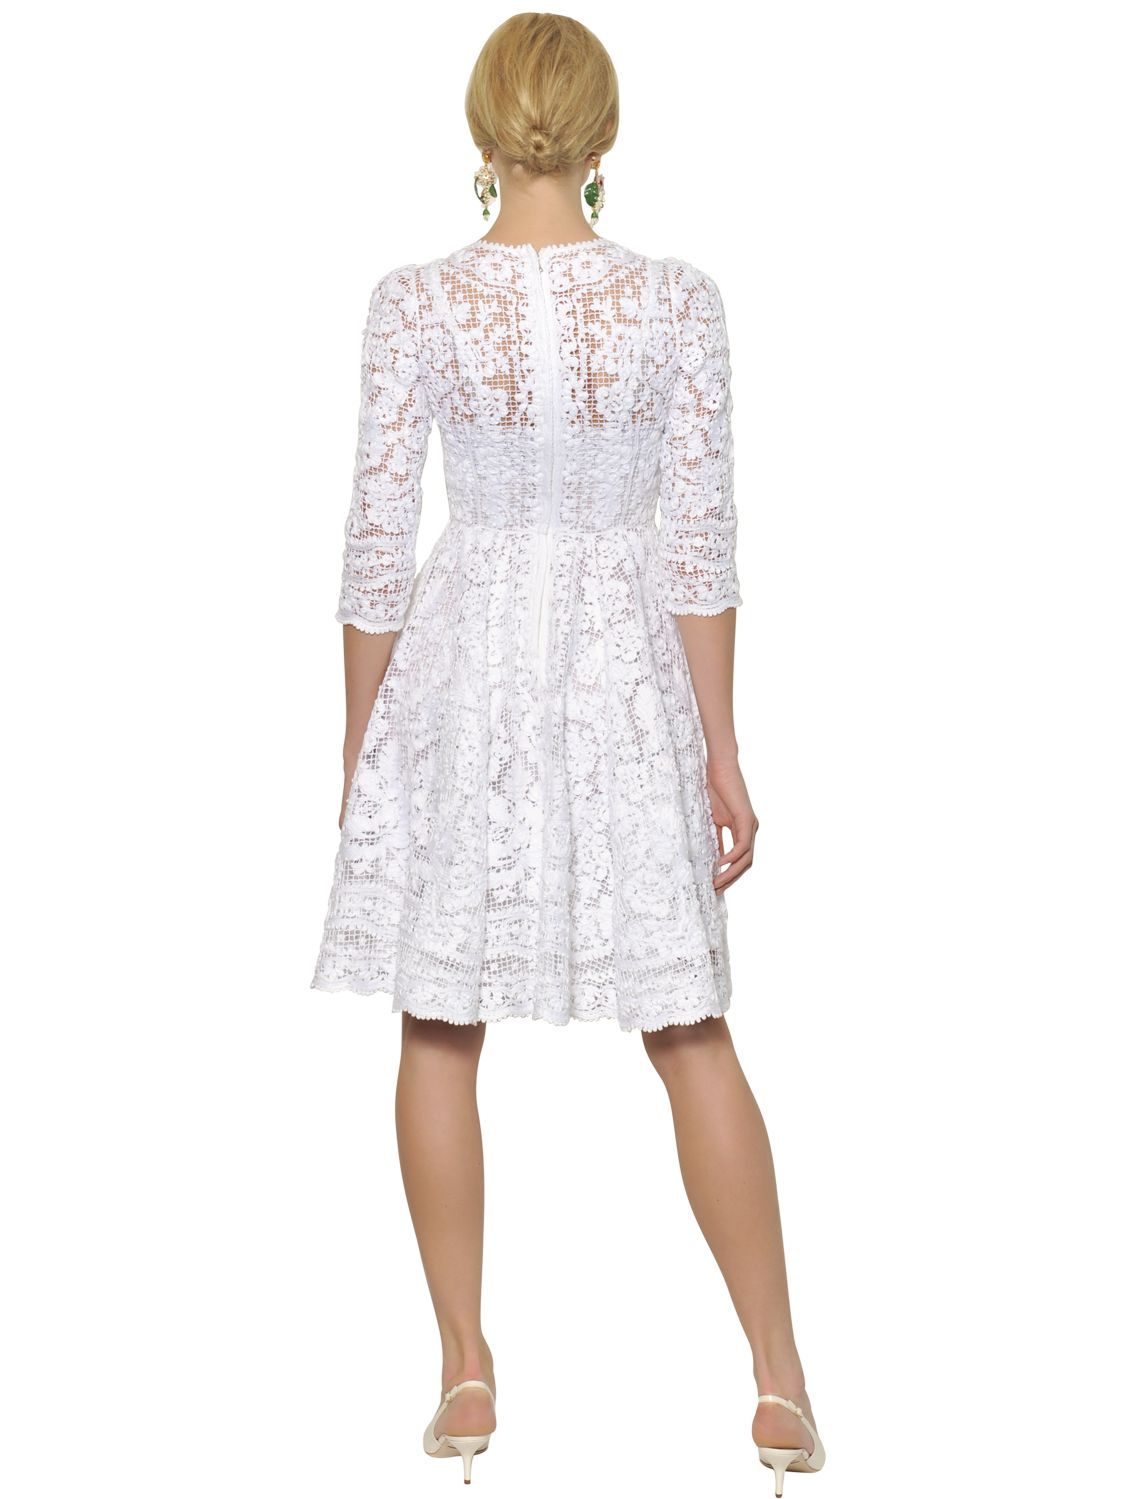 Lyst - Dolce & Gabbana White Cotton Filet Lace Dress in White